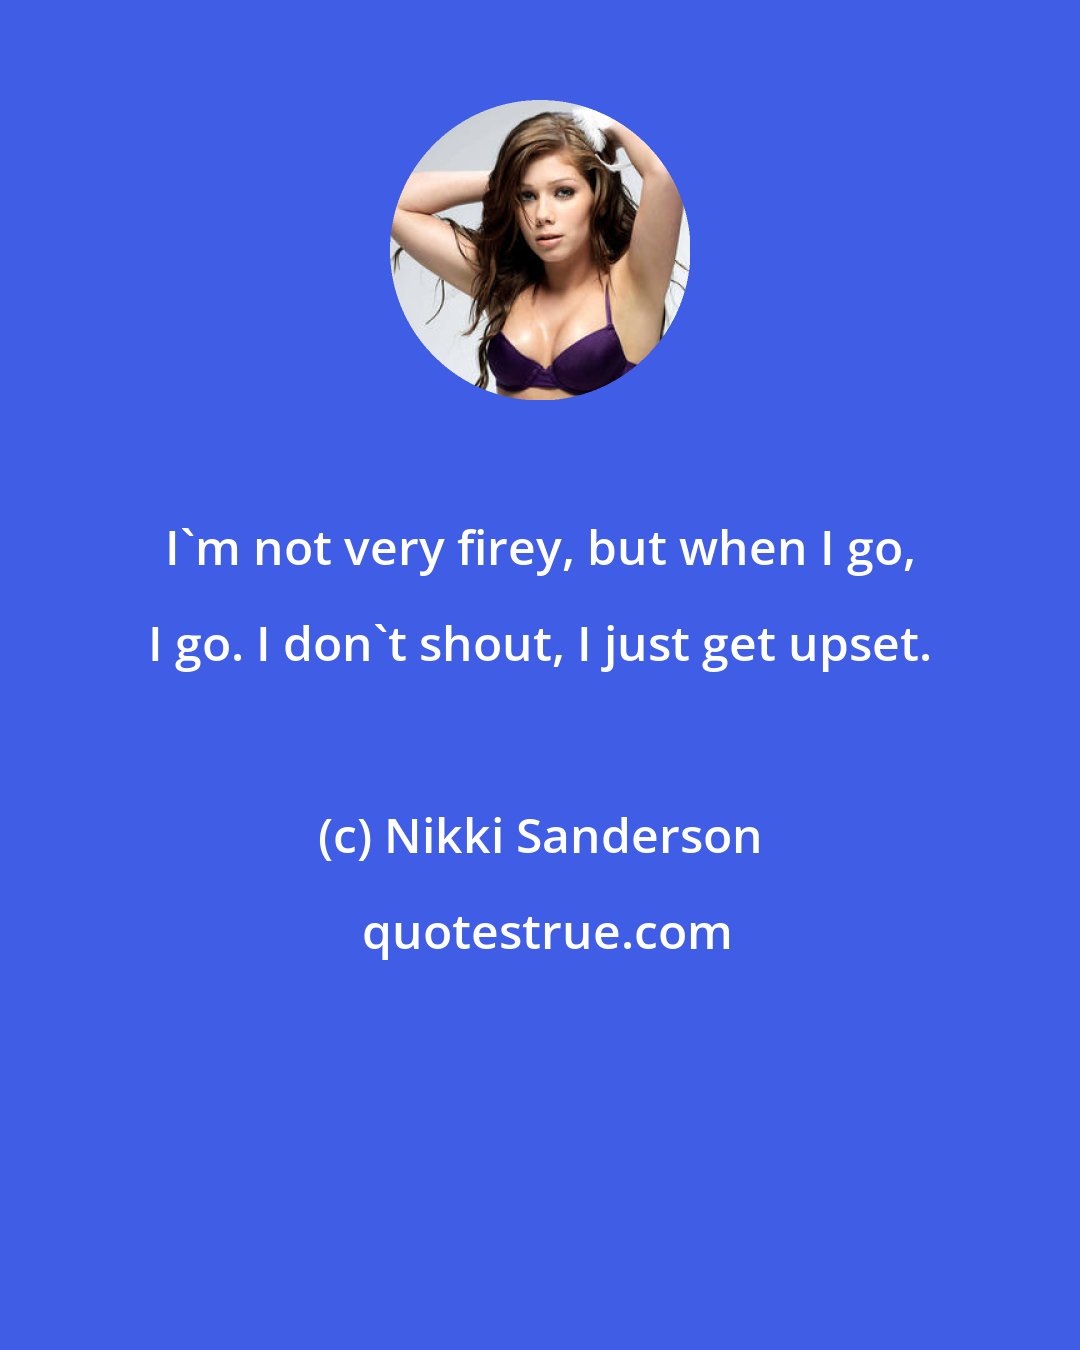 Nikki Sanderson: I'm not very firey, but when I go, I go. I don't shout, I just get upset.